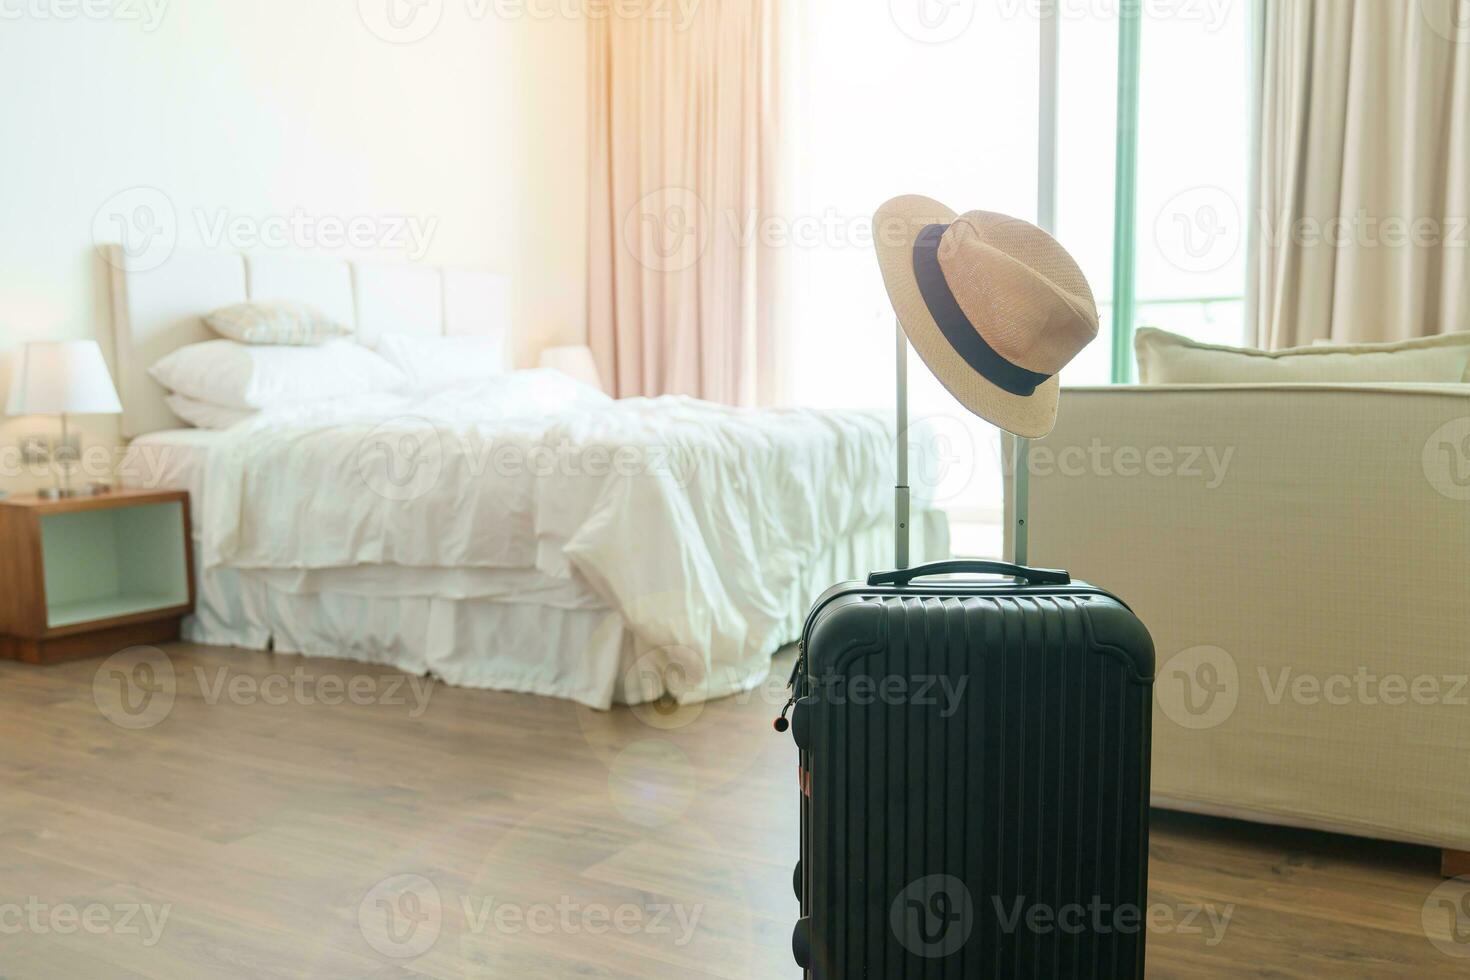 zwart bagage met hoed in modern hotel kamer na deur opening. bagage voor tijd naar reis, onderhoud, reis, reis, zomer vakantie en vakantie concepten foto